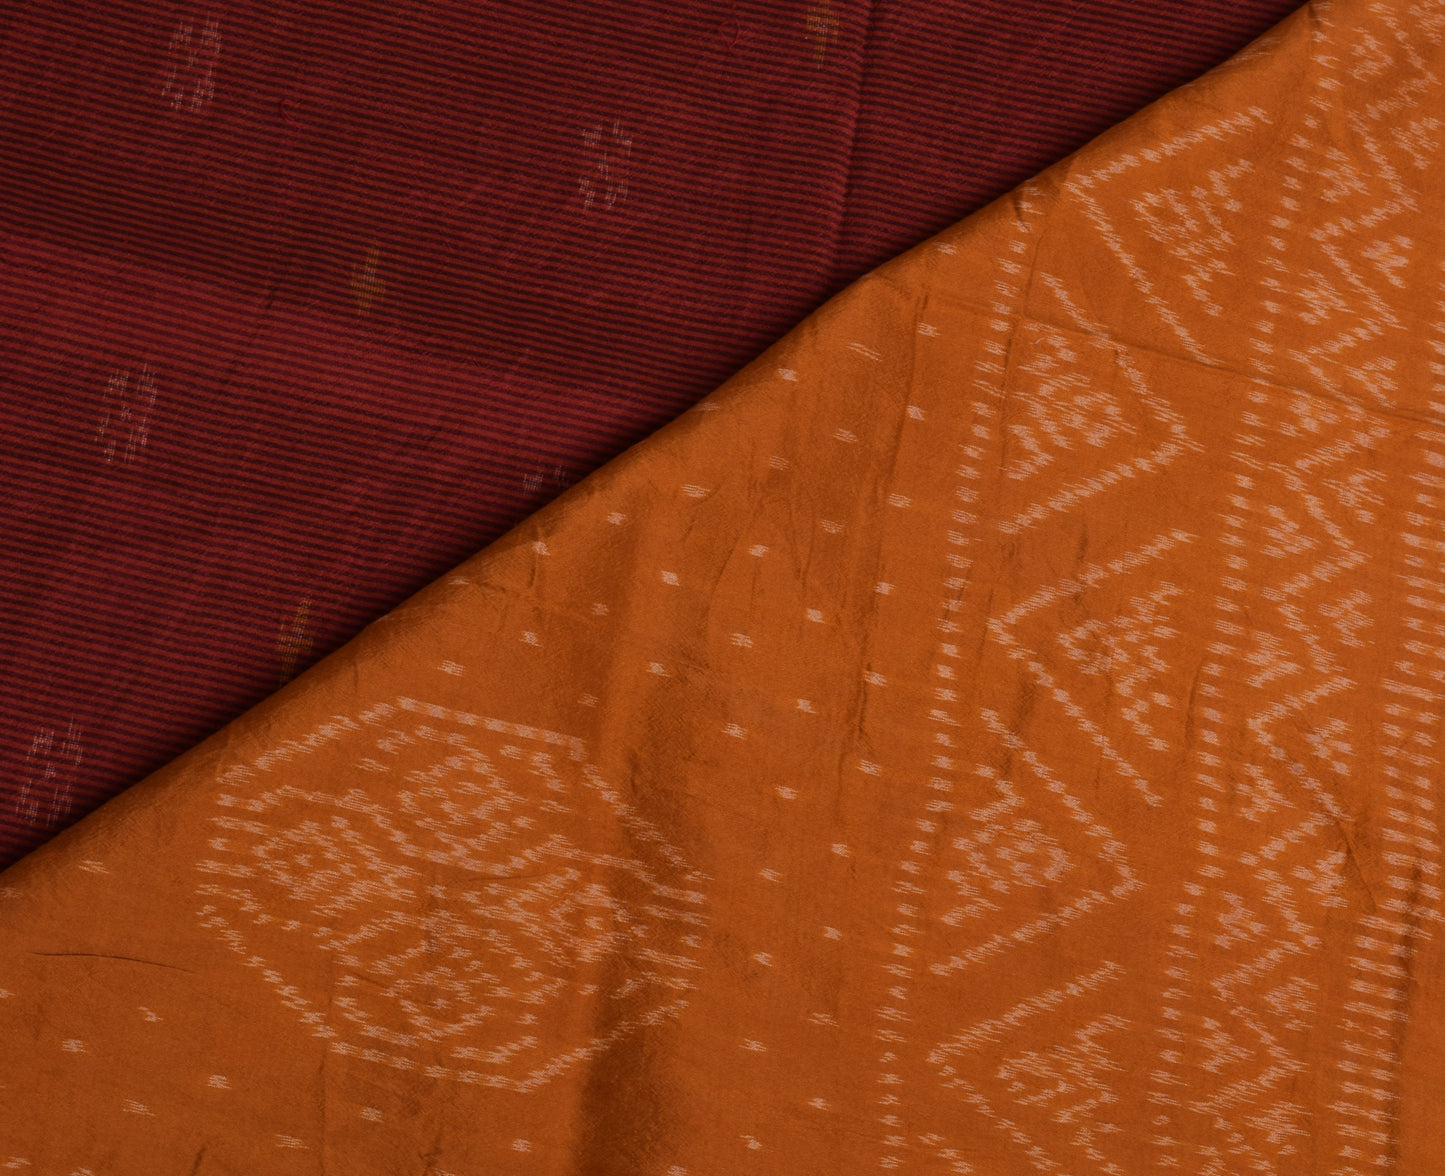 Sushila Vintage Maroon Saree Pure Silk Hand Woven Ikat Patola Sari Craft Fabric